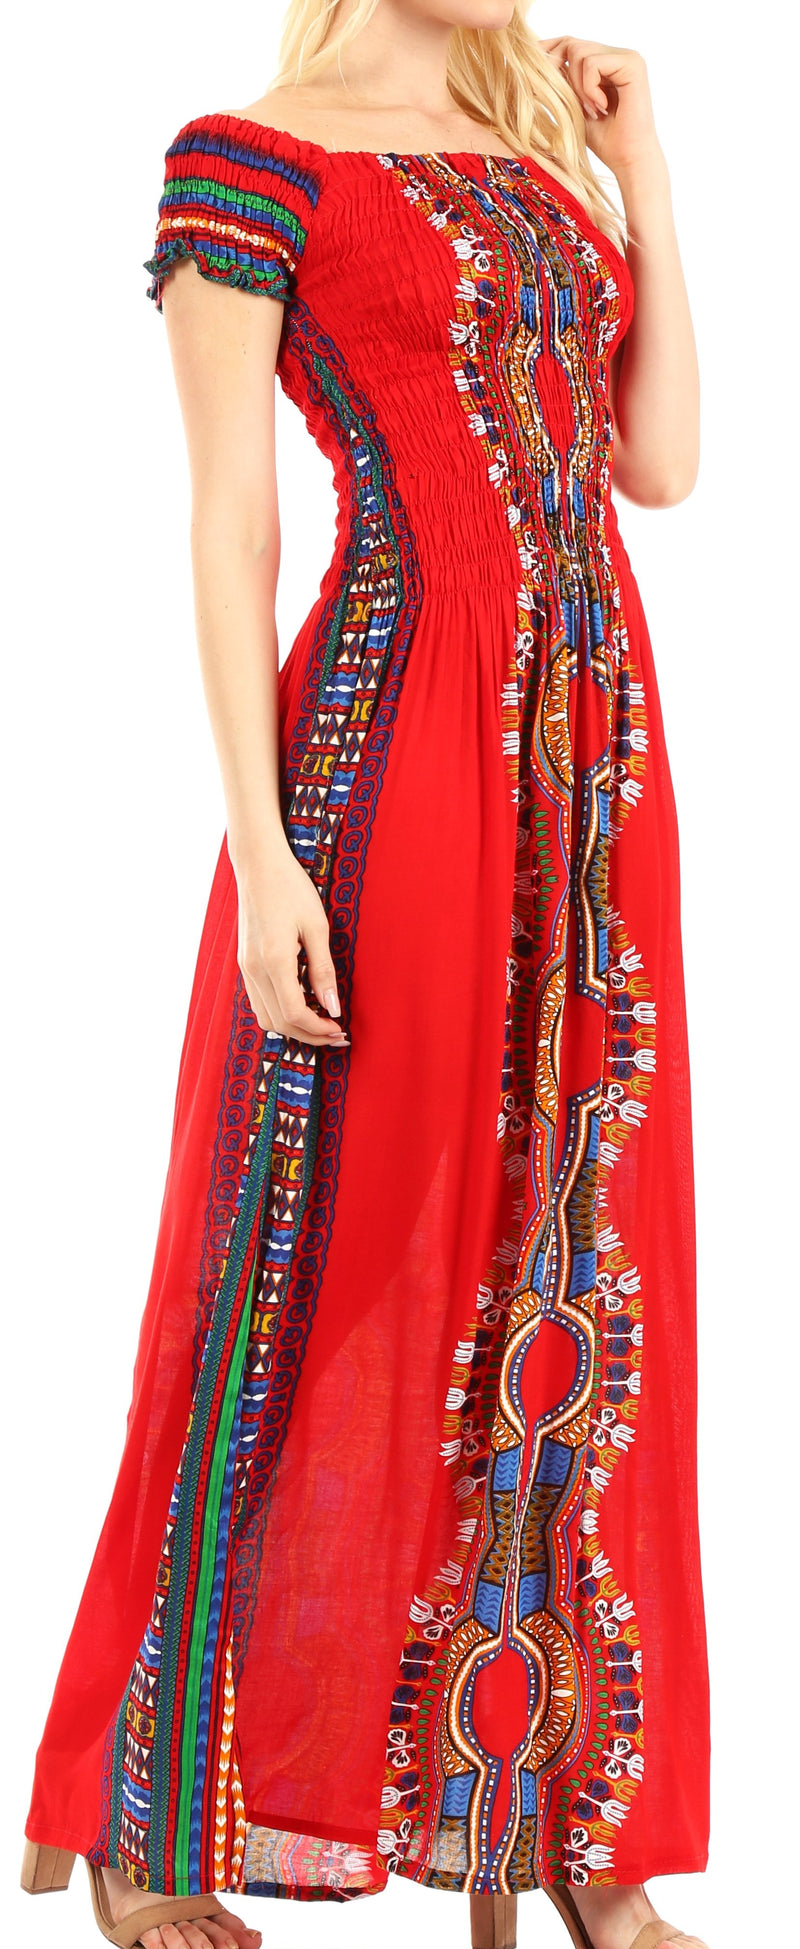 Sakkas Siona Women's Long Maxi Casual Off Shoulder Dashiki African Dress Elastic